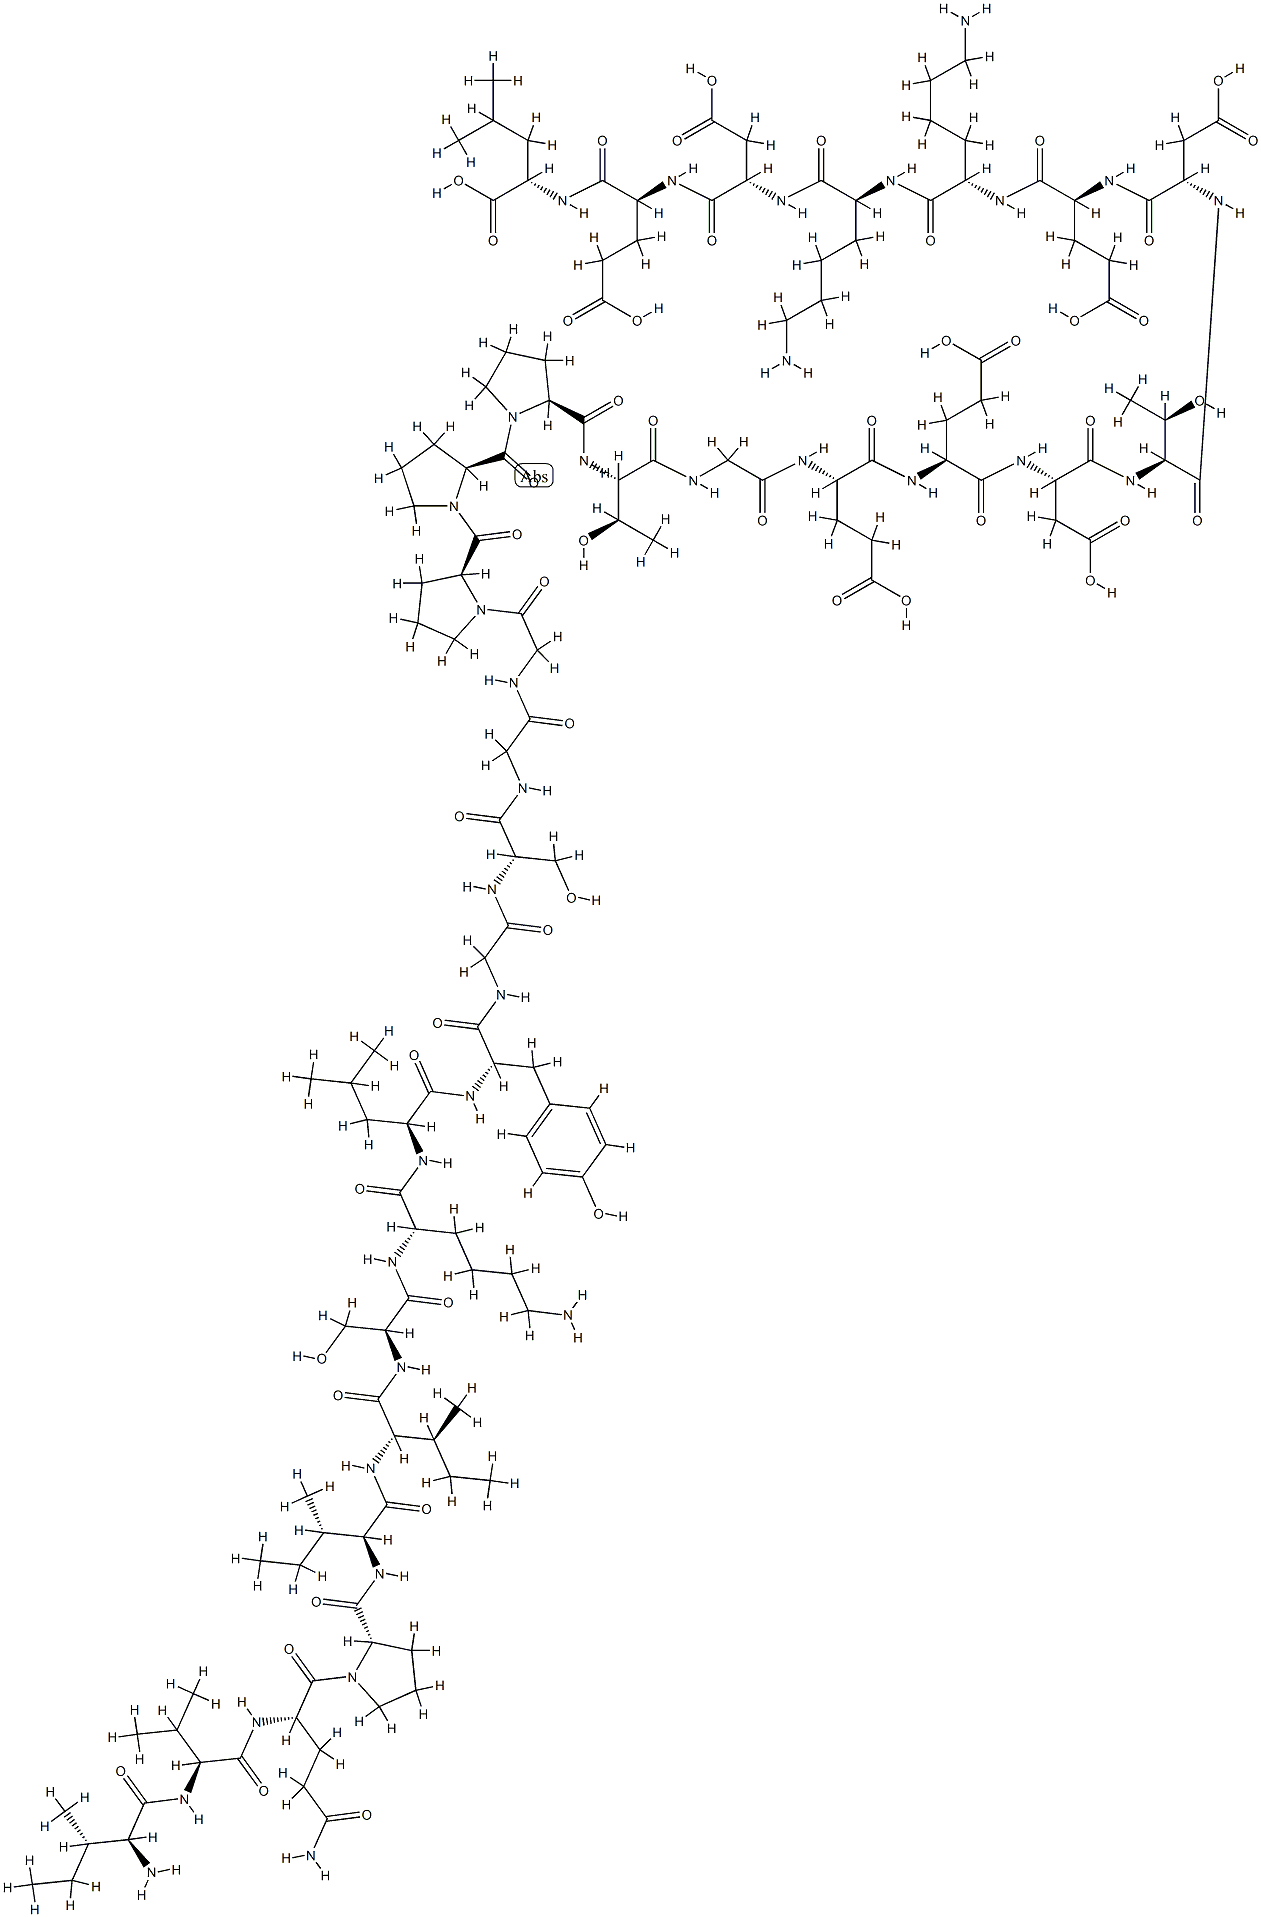 steroidogenesis-activator polypeptide|H-ILE-VAL-GLN-PRO-ILE-ILE-SER-LYS-LEU-TYR-GLY-SER-GLY-GLY-PRO-PRO-PRO-THR-GLY-GLU-GLU-ASP-THR-ASP-GLU-LYS-LYS-ASP-GLU-LEU-OH